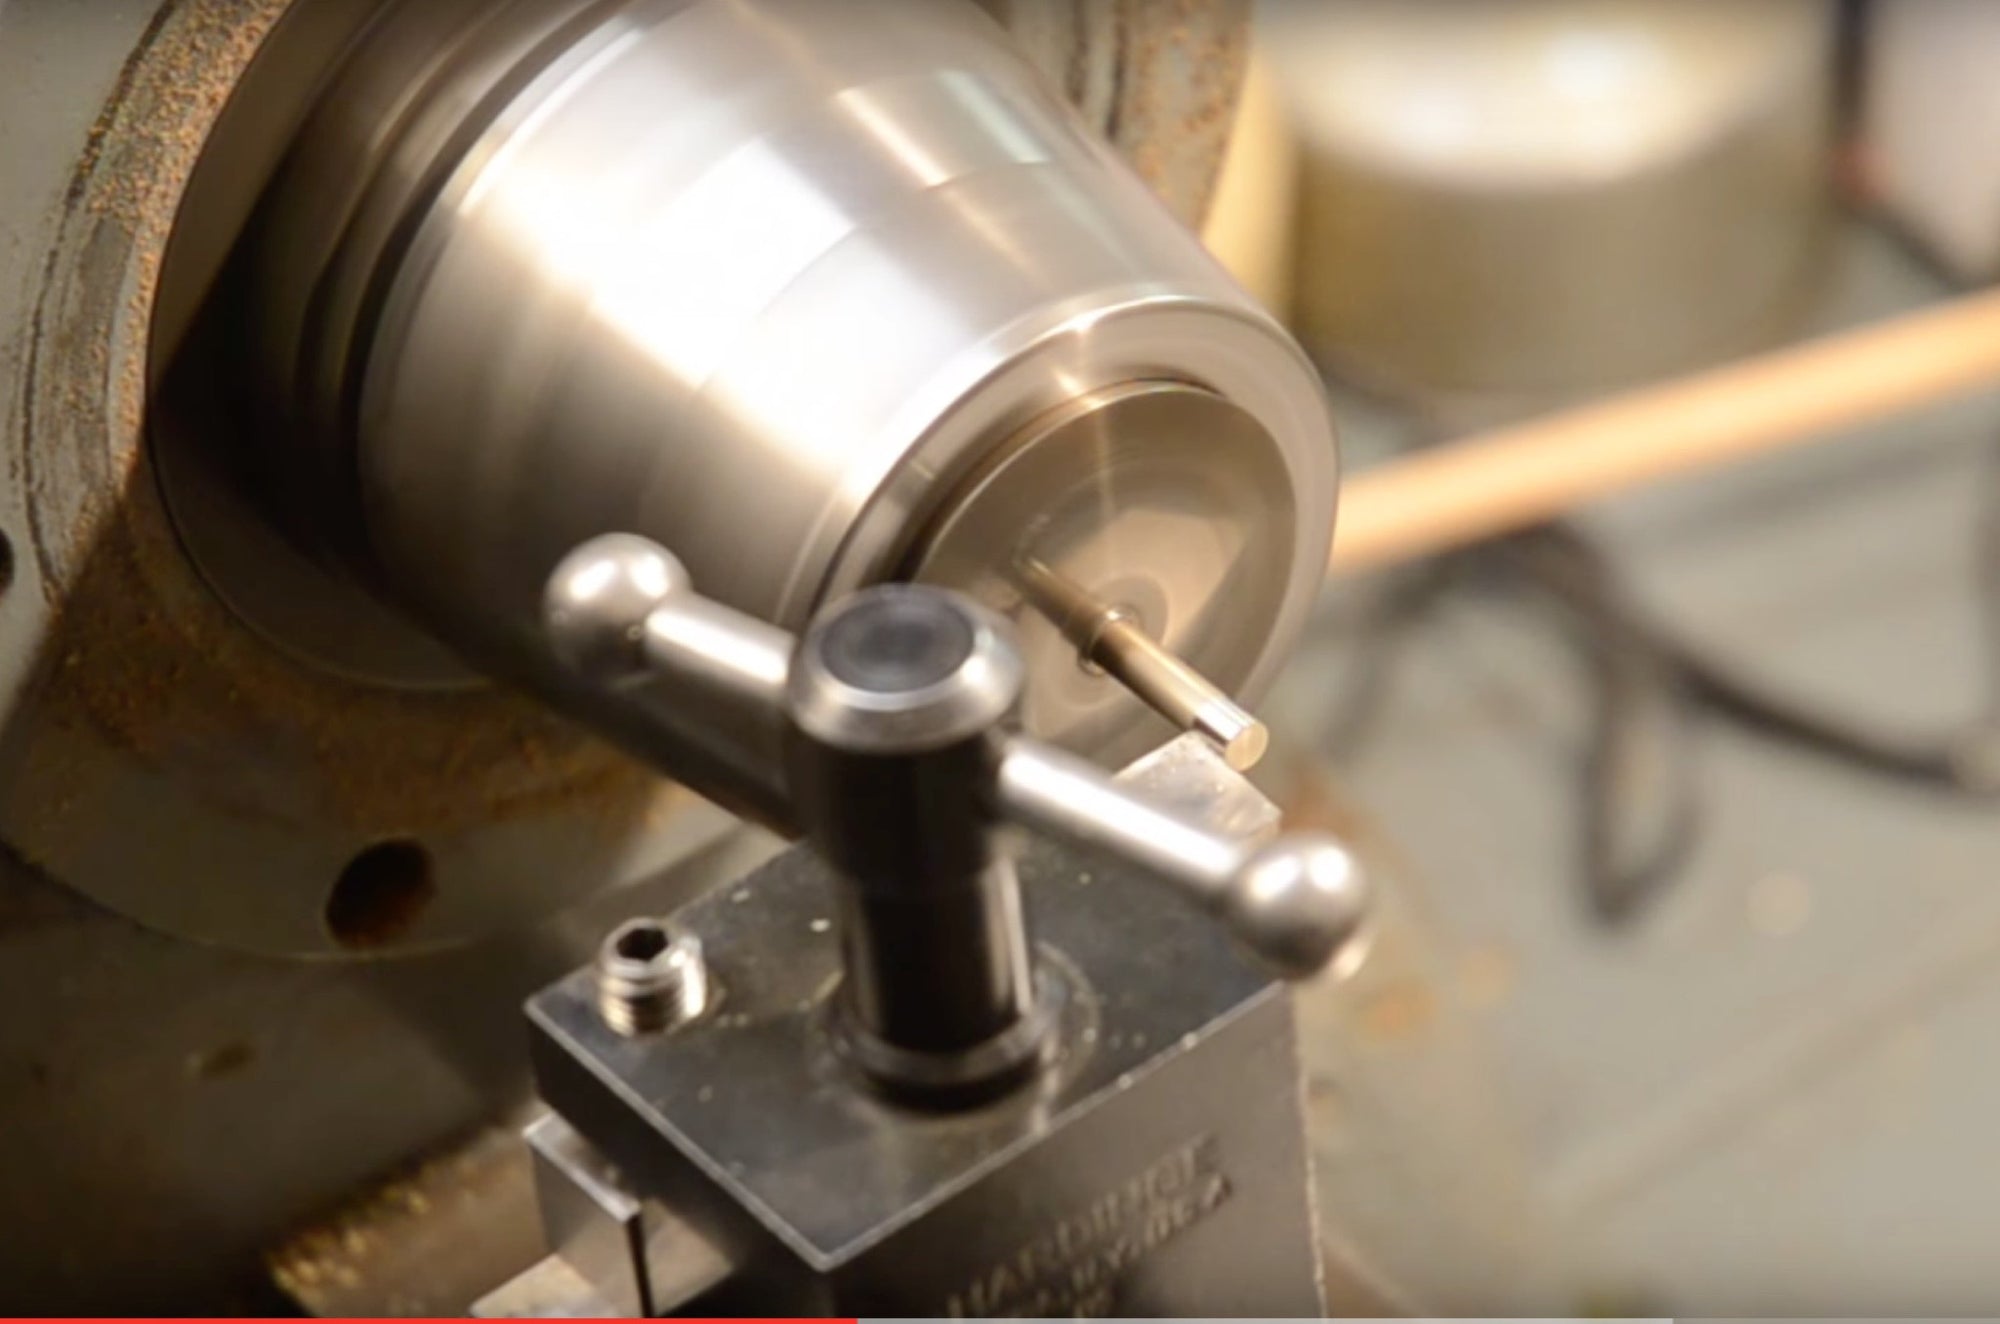 New Video: Making Precision Ferrules